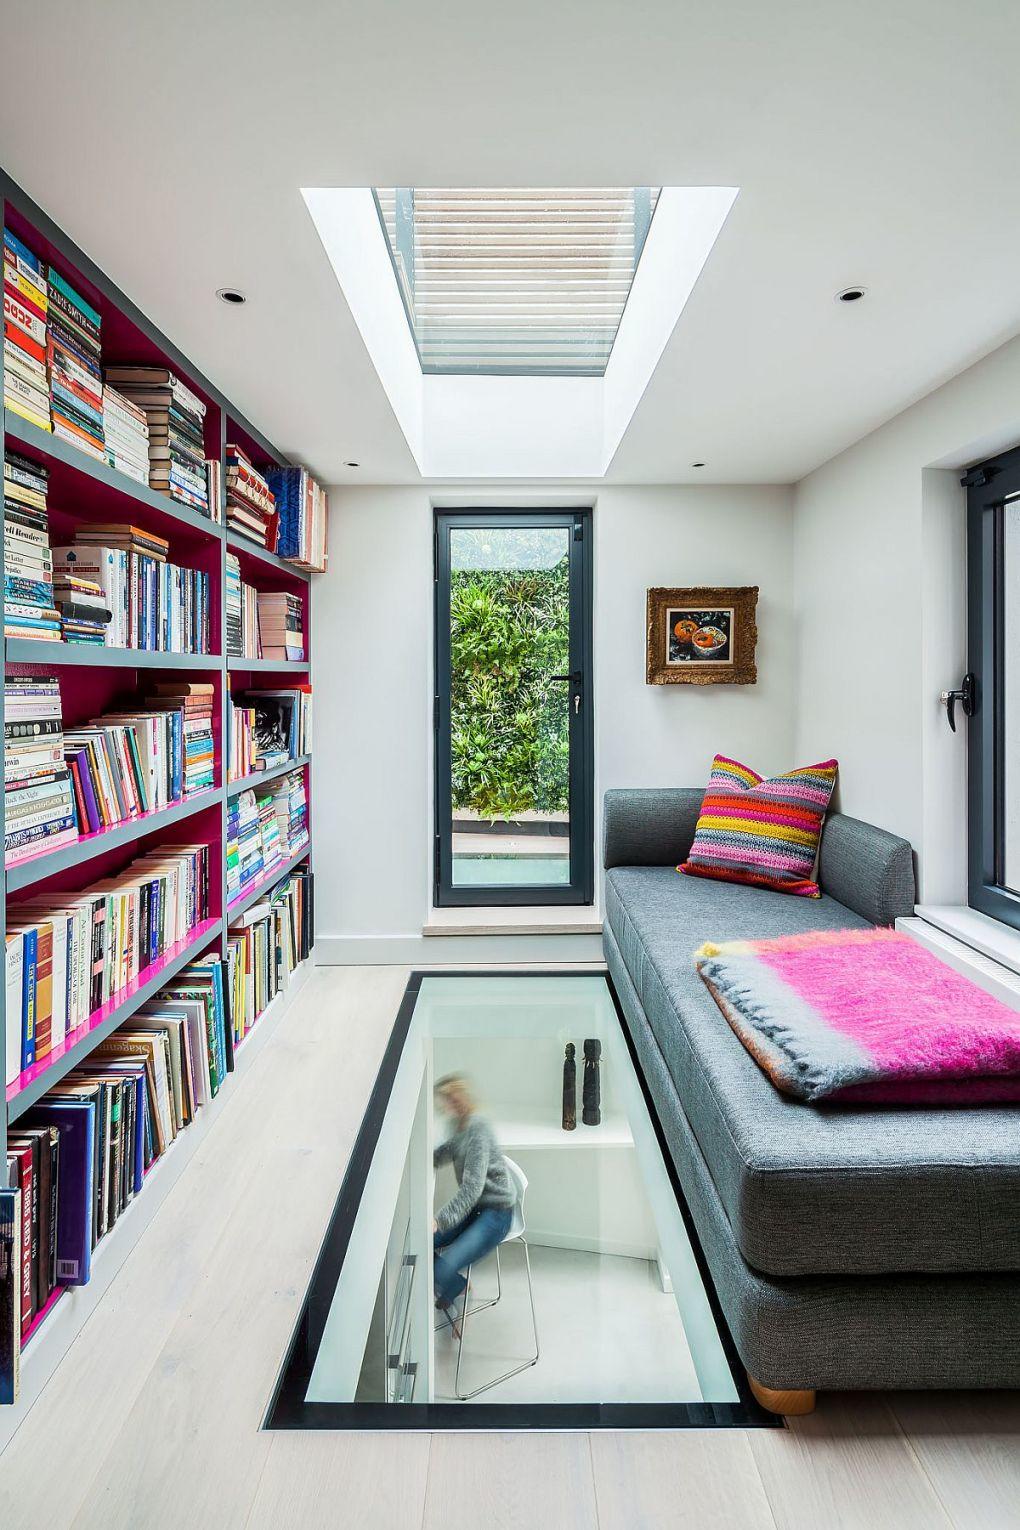 Eski Ev Yenileme Fikirleri | Glass flooring and skylight bring in ample natural light 1